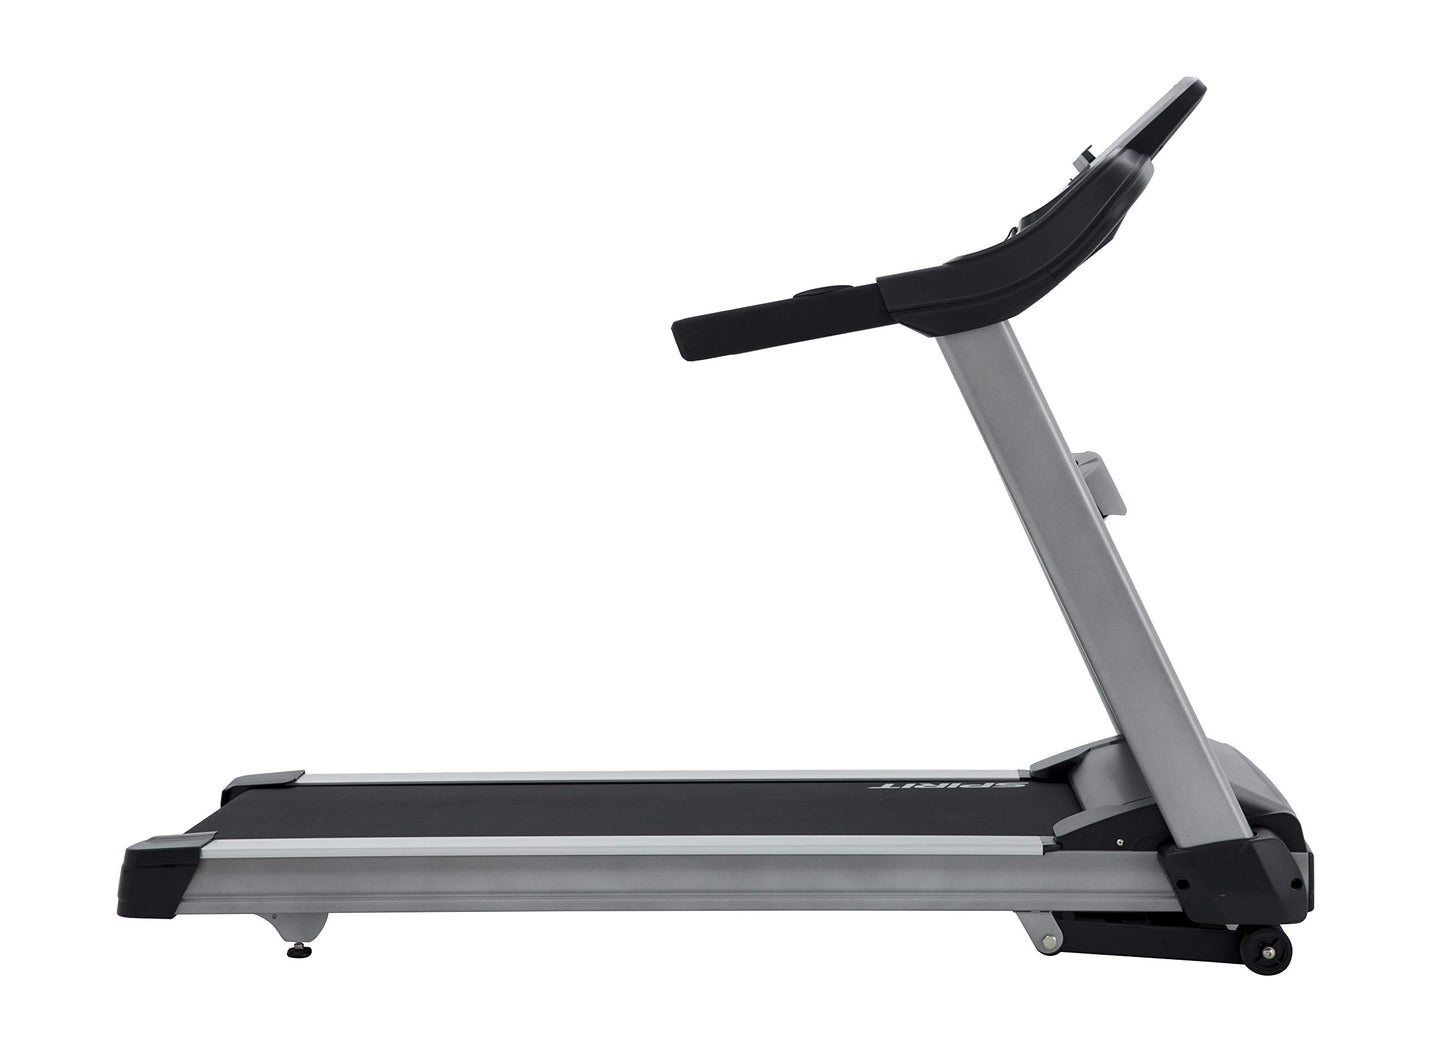 Spirit Fitness XT685 Treadmill Black